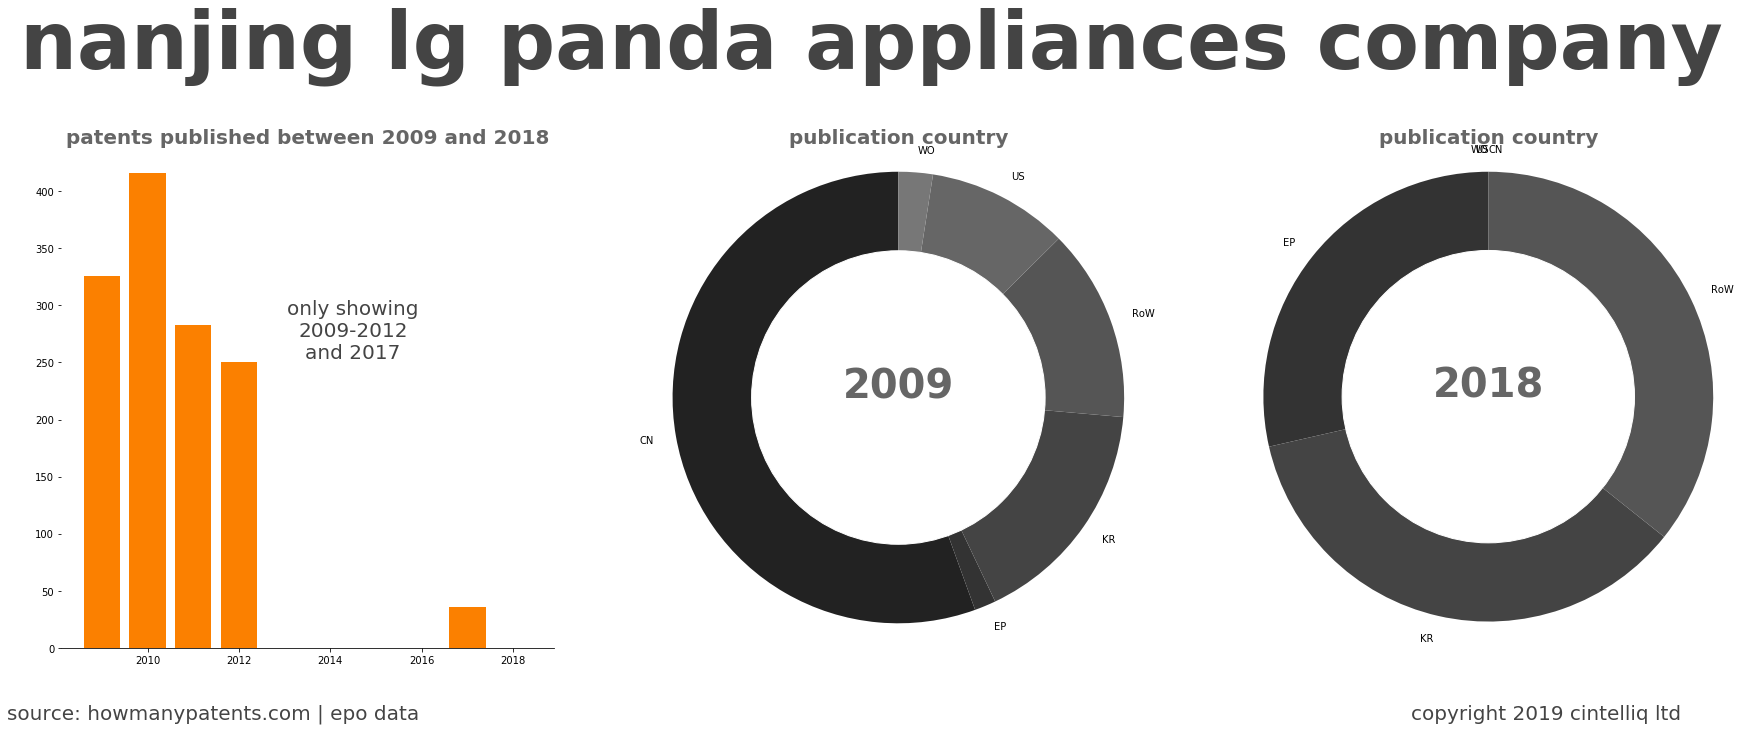 summary of patents for Nanjing Lg Panda Appliances Company